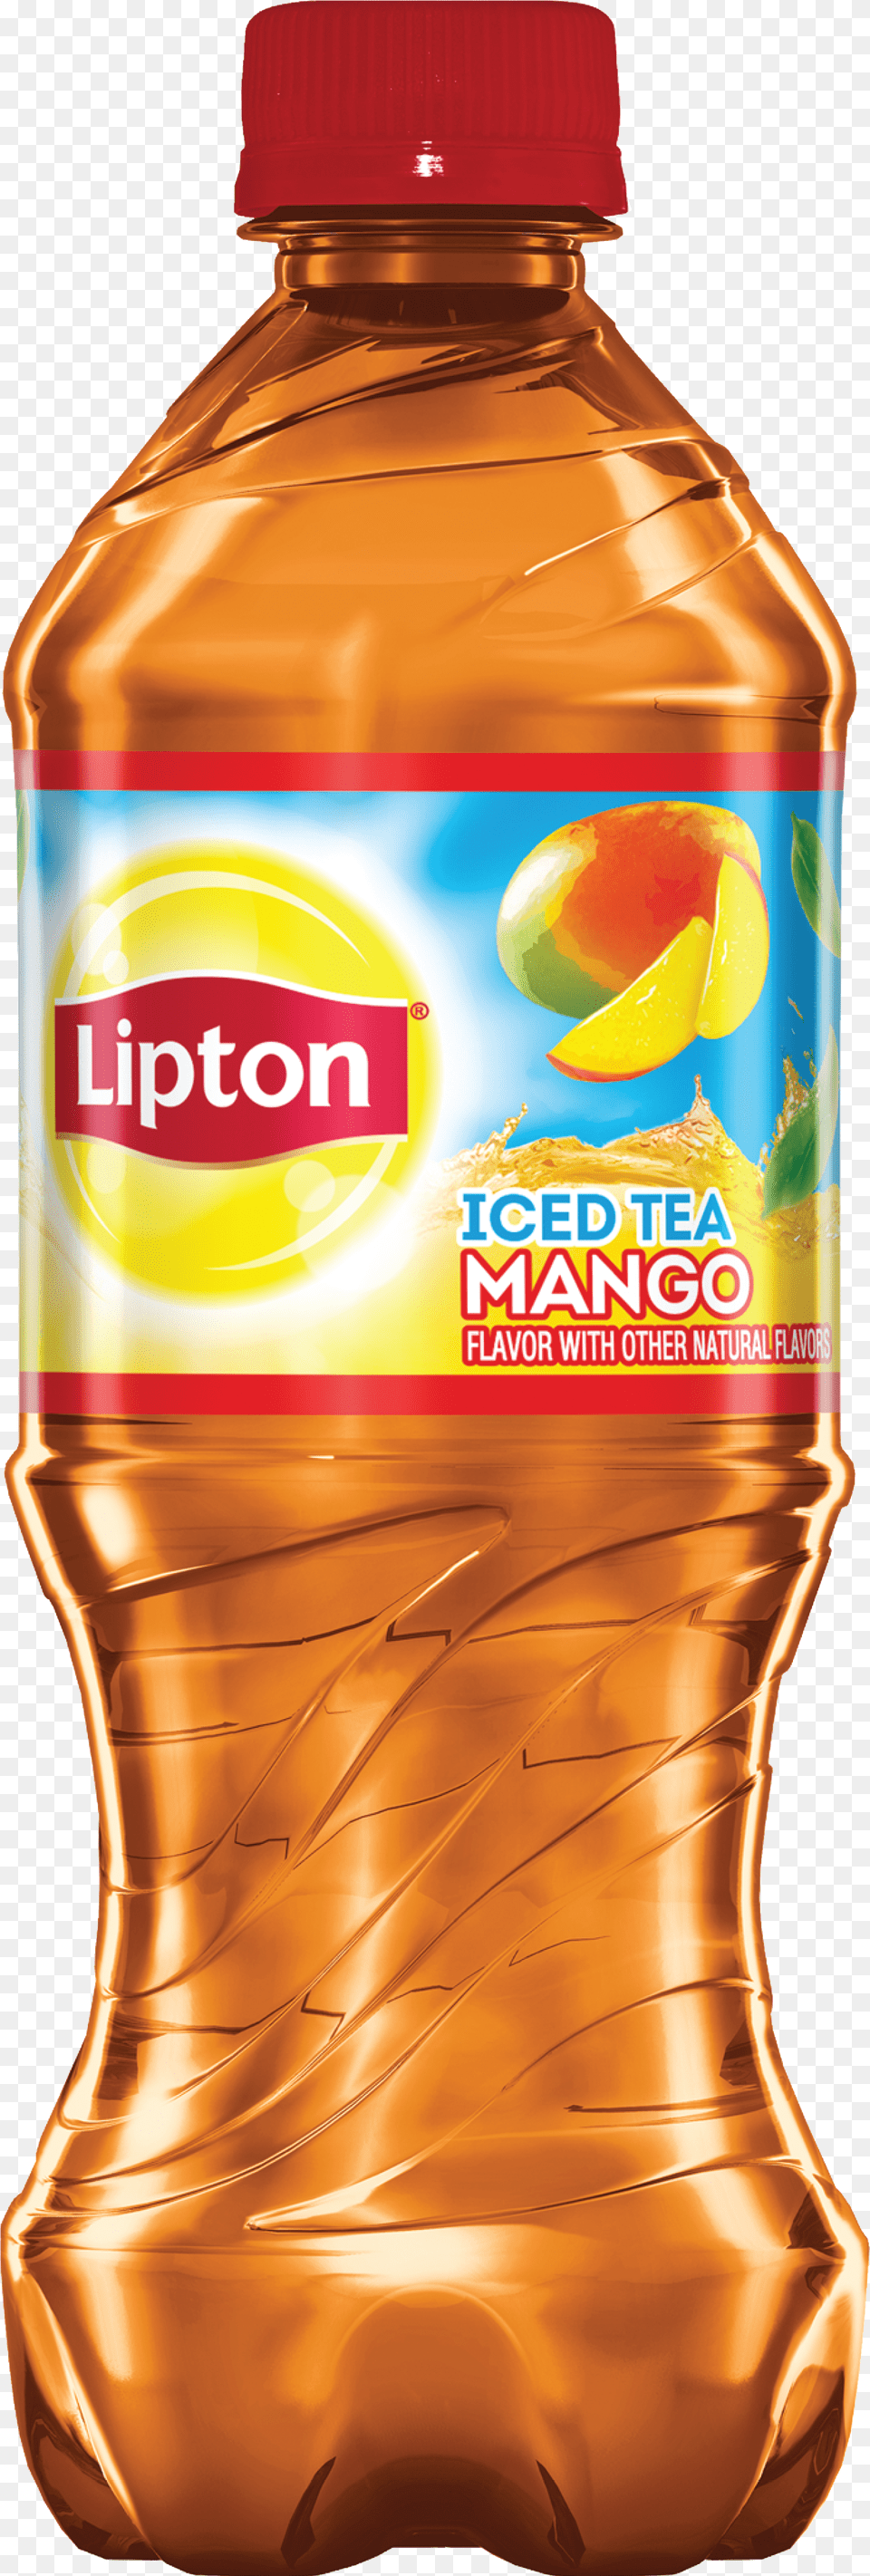 Lipton Iced Tea Bottle Png Image